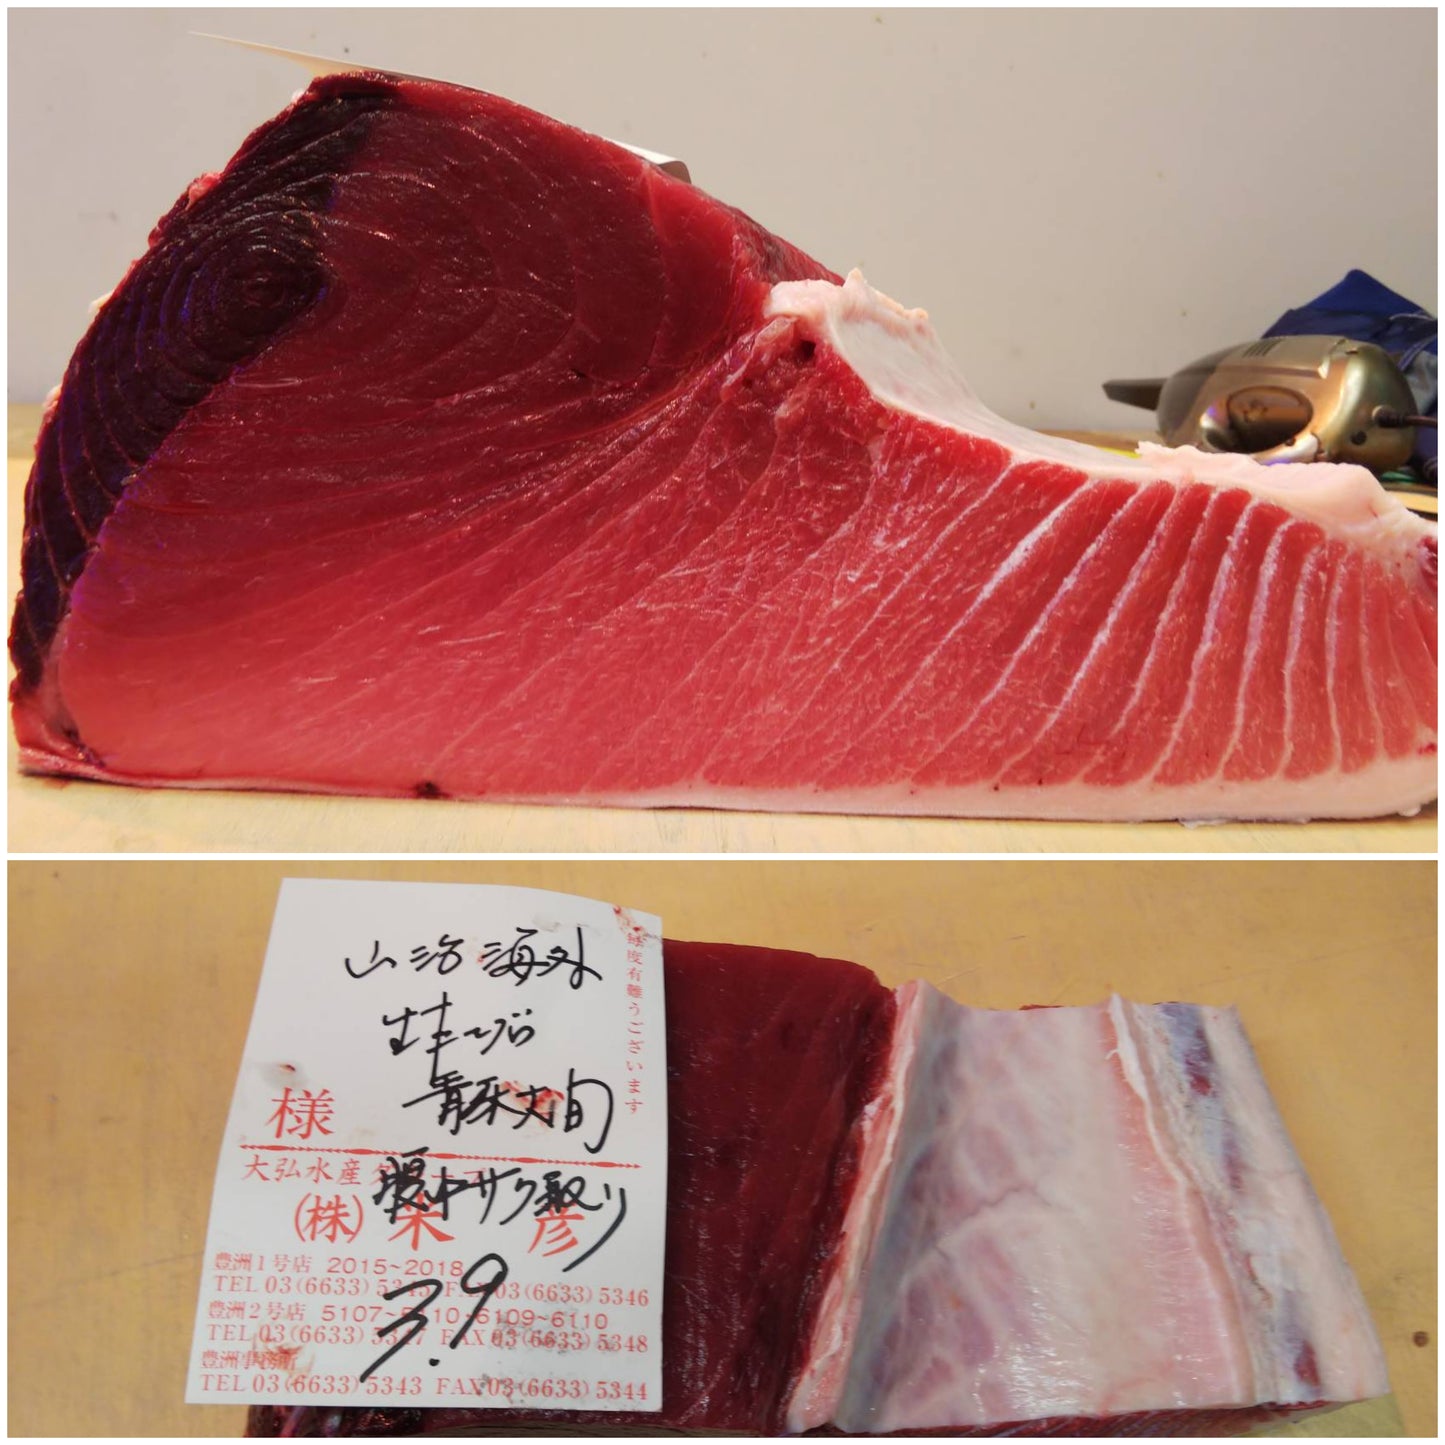 Wild Bluefin Tuna 野生藍鰭金槍魚 (Please see description)